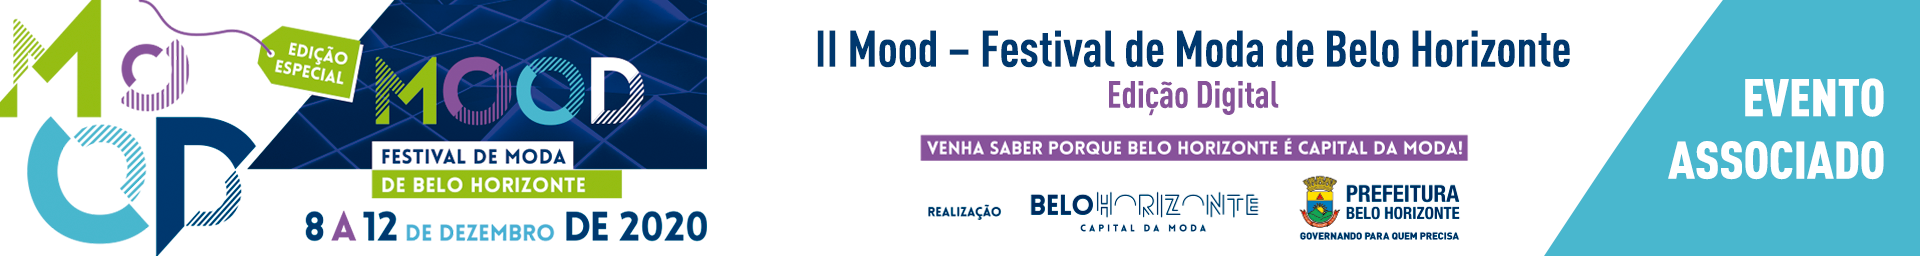 II MOOD - Festival de Moda de Belo Horizonte